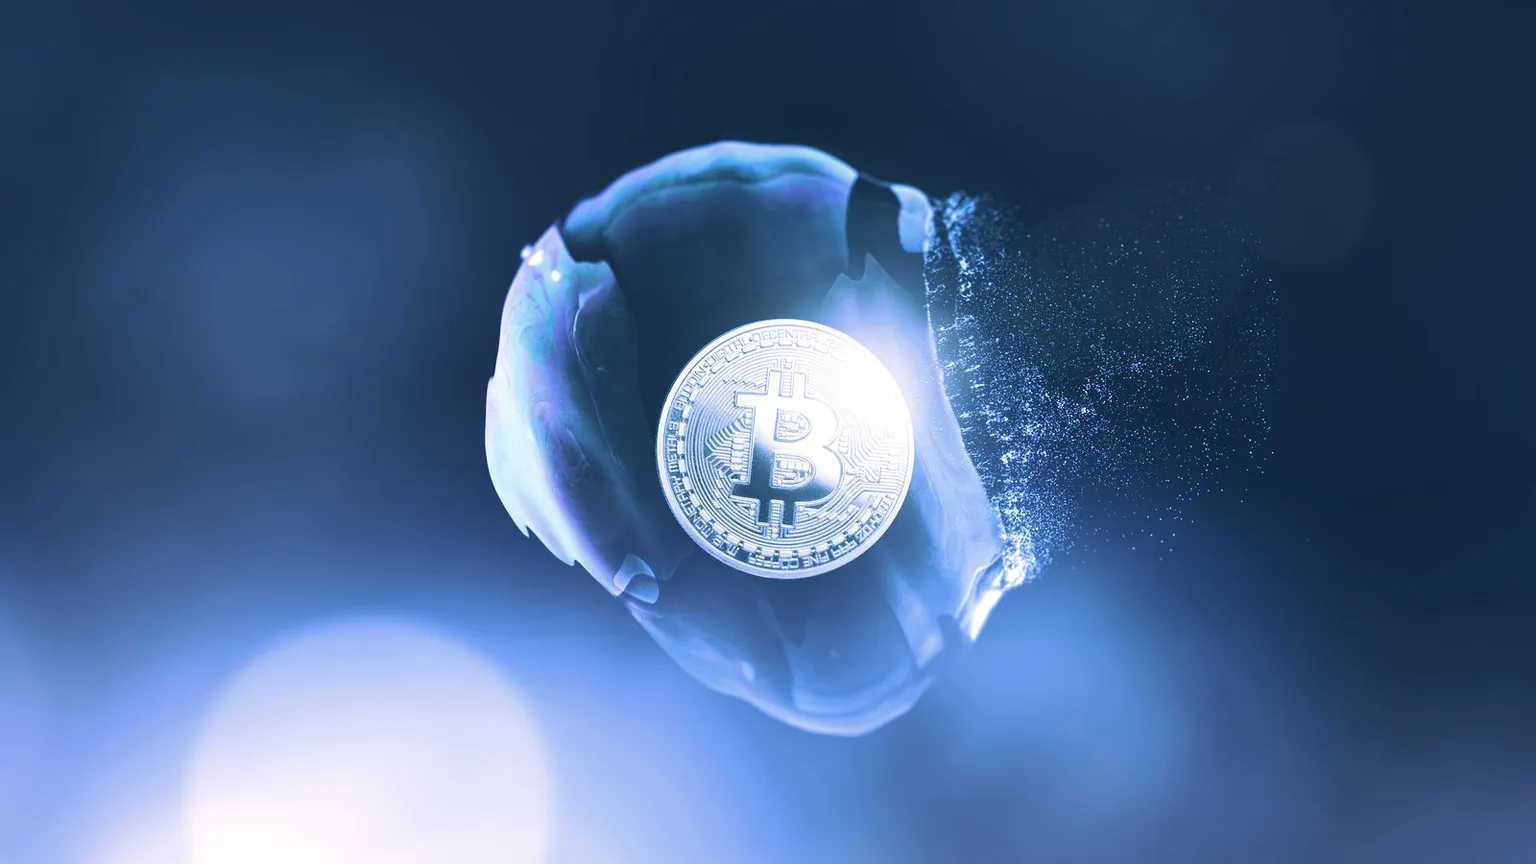 El estallido de una burbuja de Bitcoin. Imagen: Shutterstock